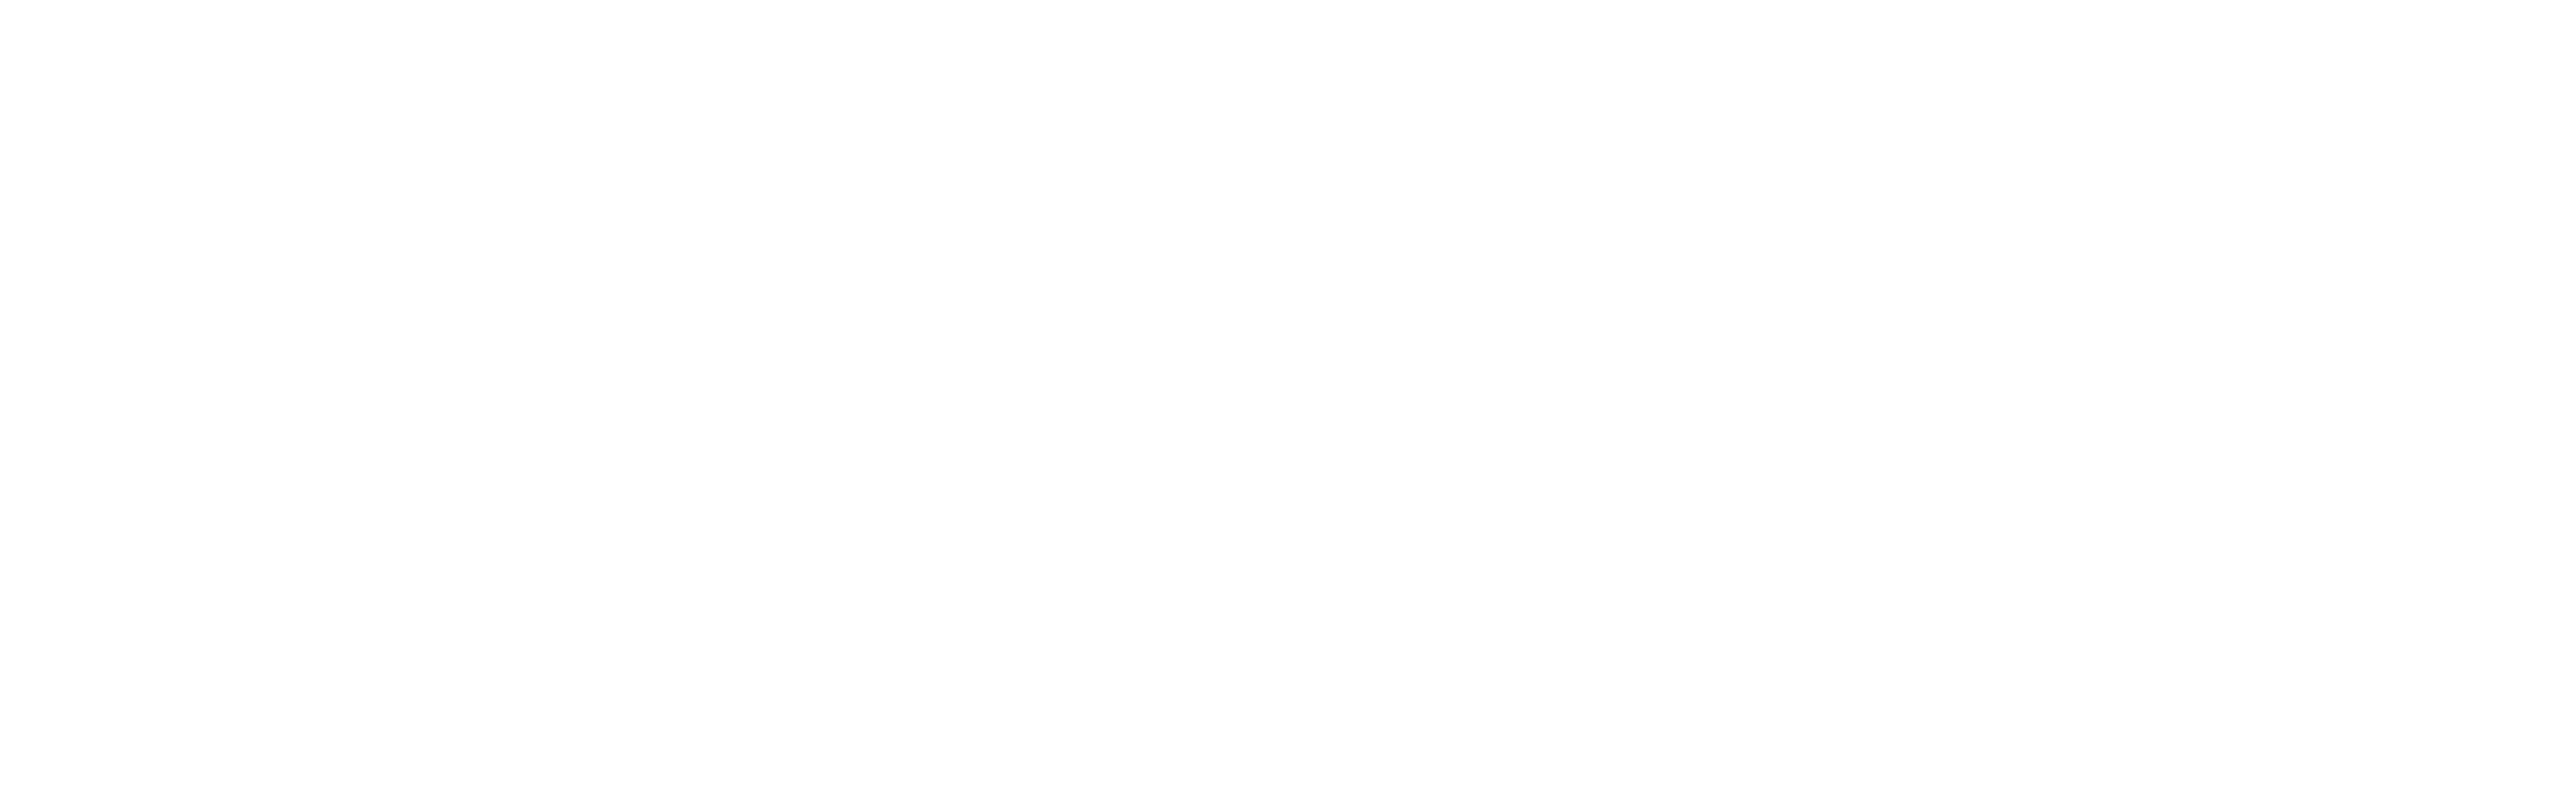 Digital Arts Resource